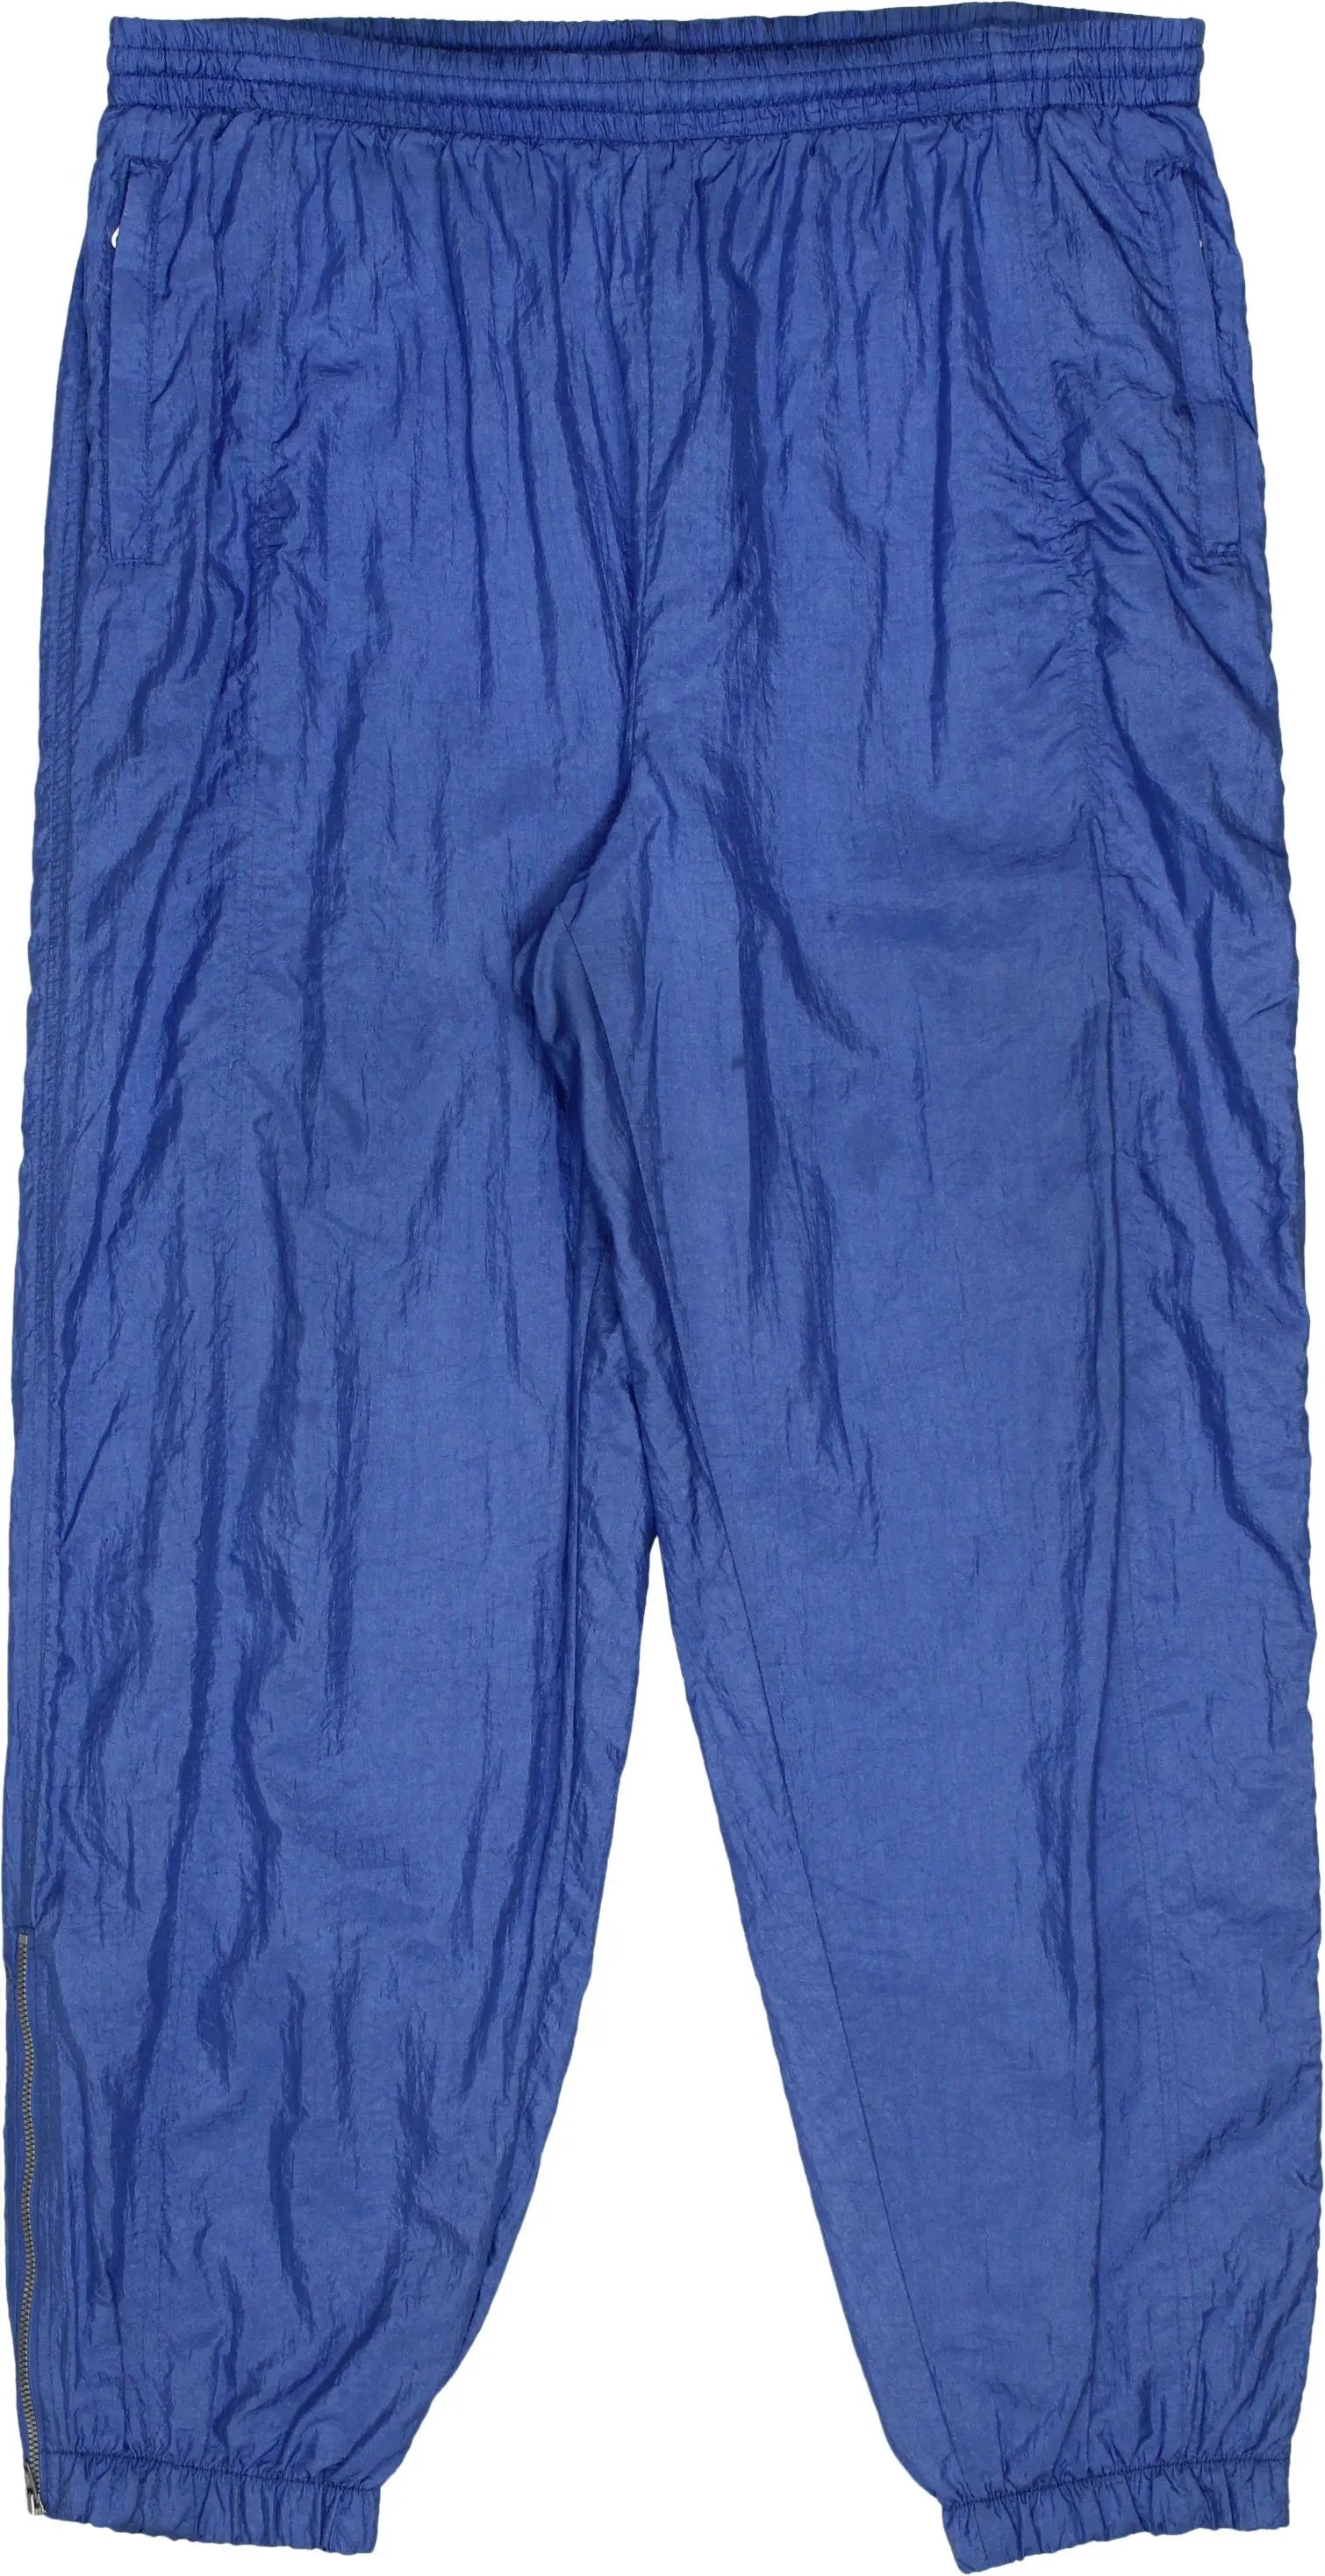 ATHLETA RESTORE JOGGERS Womens Large Pant Gray heather Soft Pockets 818408  £16.03 - PicClick UK